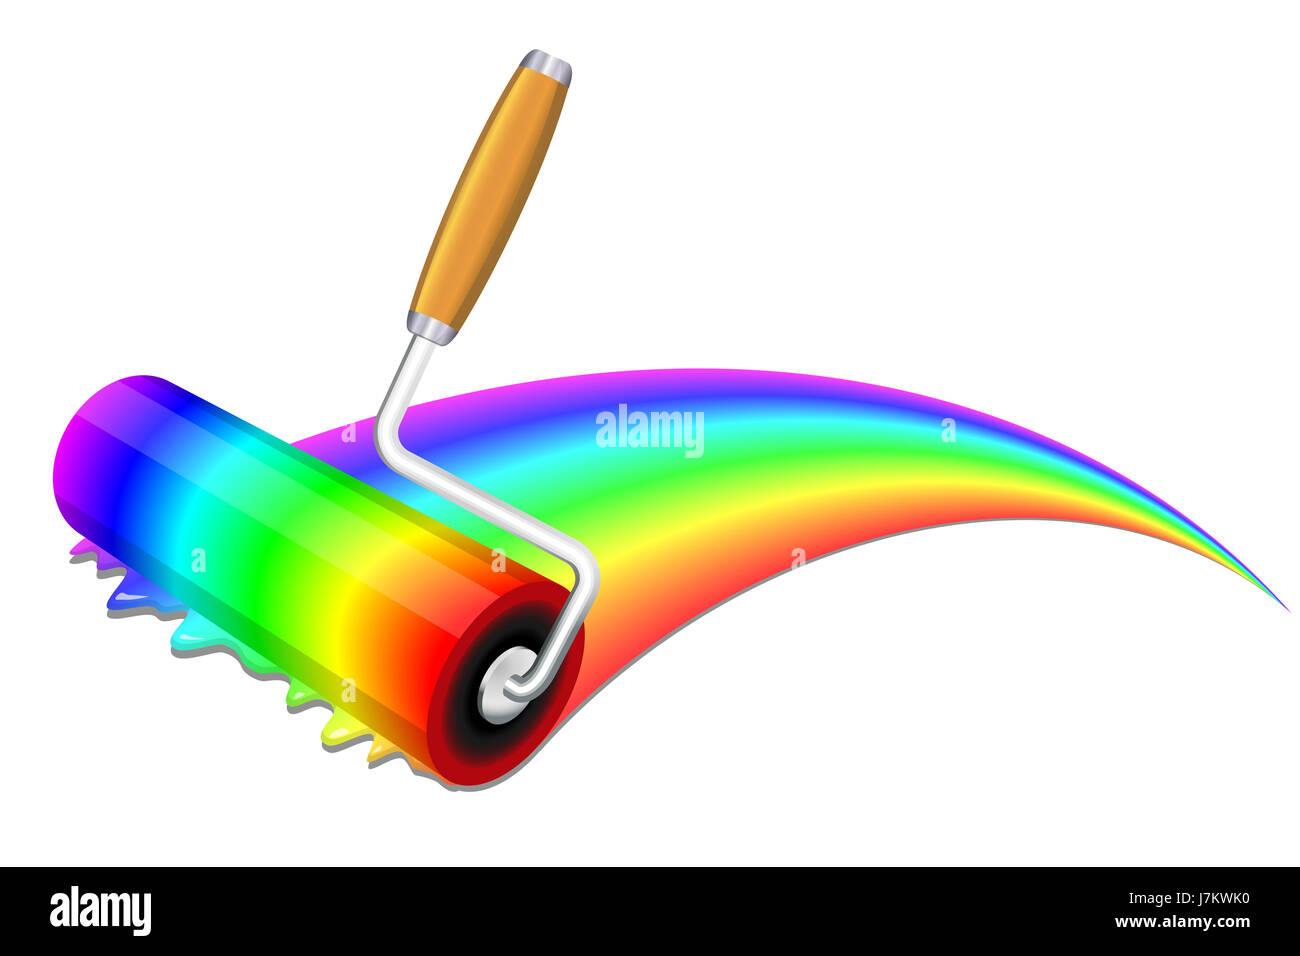 Werkzeug Farbe Malerei Regenbogen Deko Farbe Walze Farbe Werkzeug Kunst  Farbe Stockfotografie - Alamy